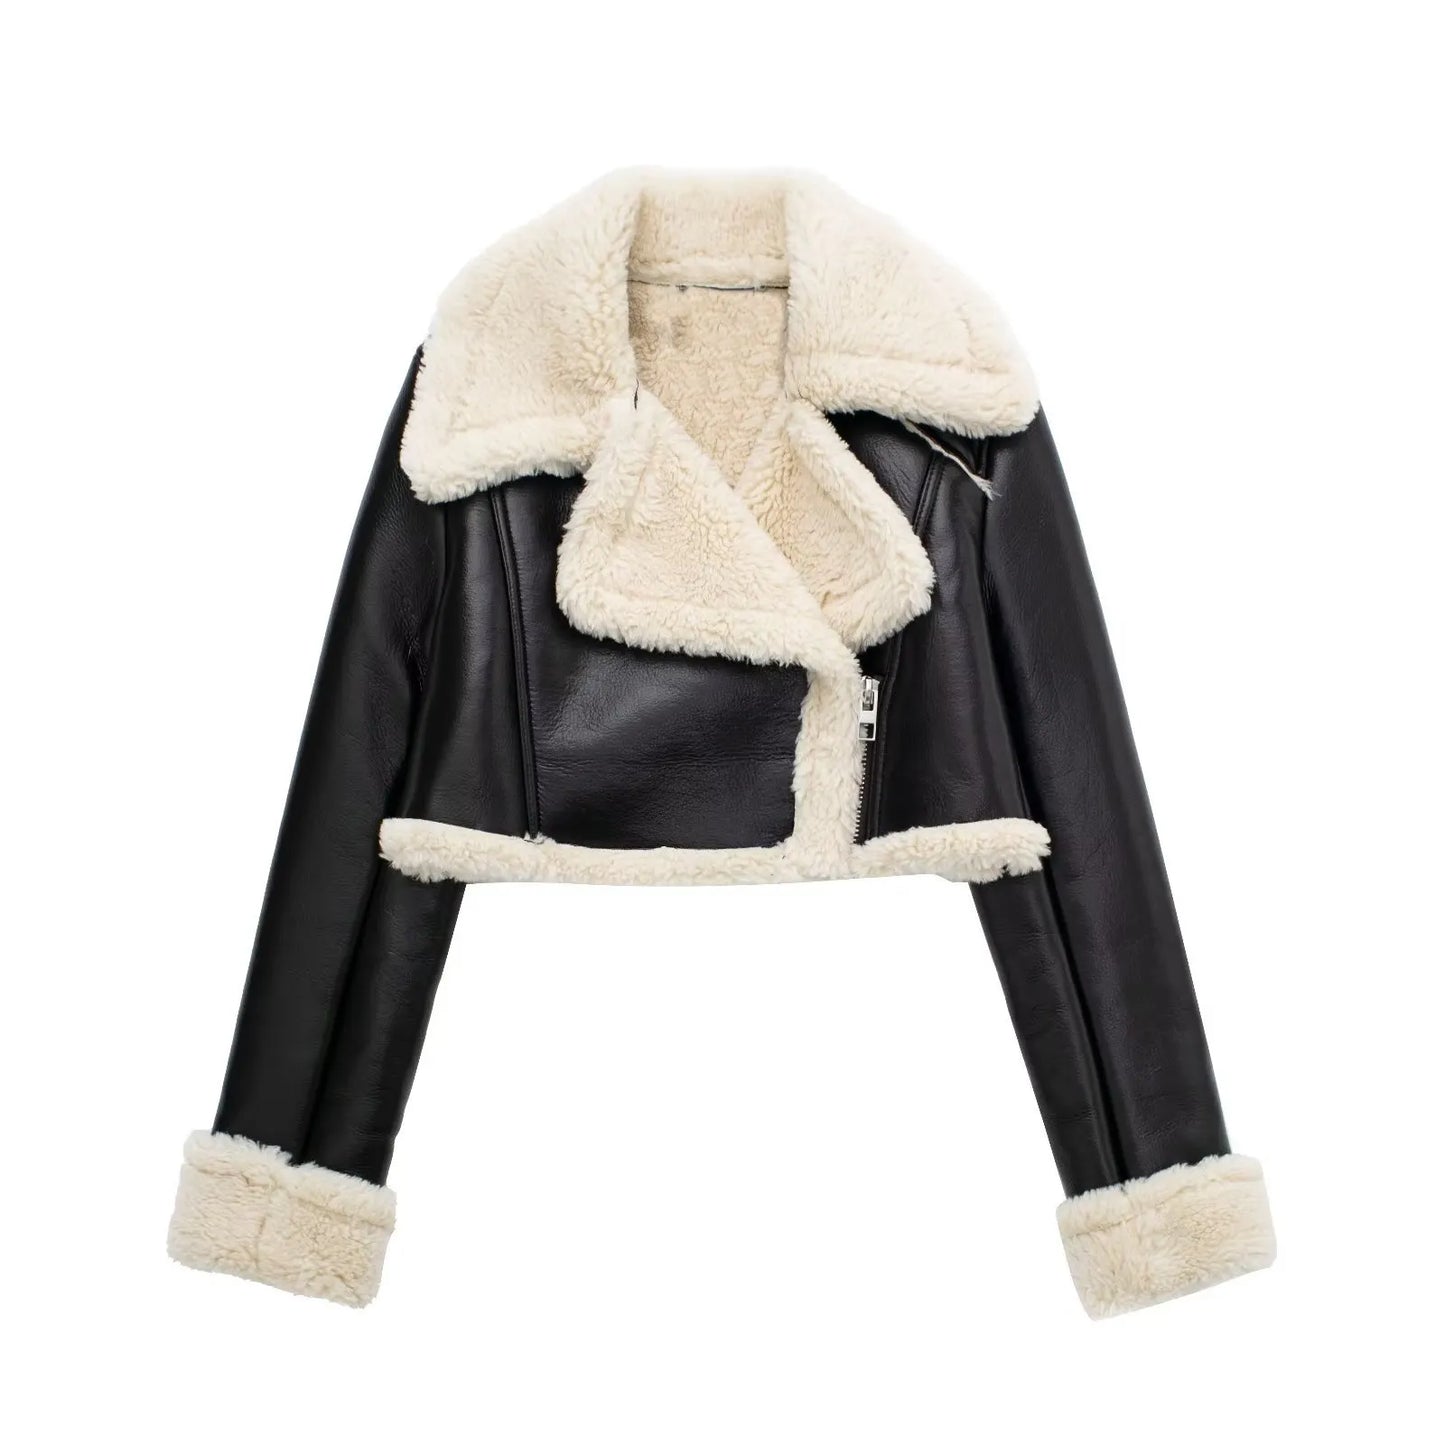 “Try Again” Women’s Vintage High Street Style Lambswool Winter Coat